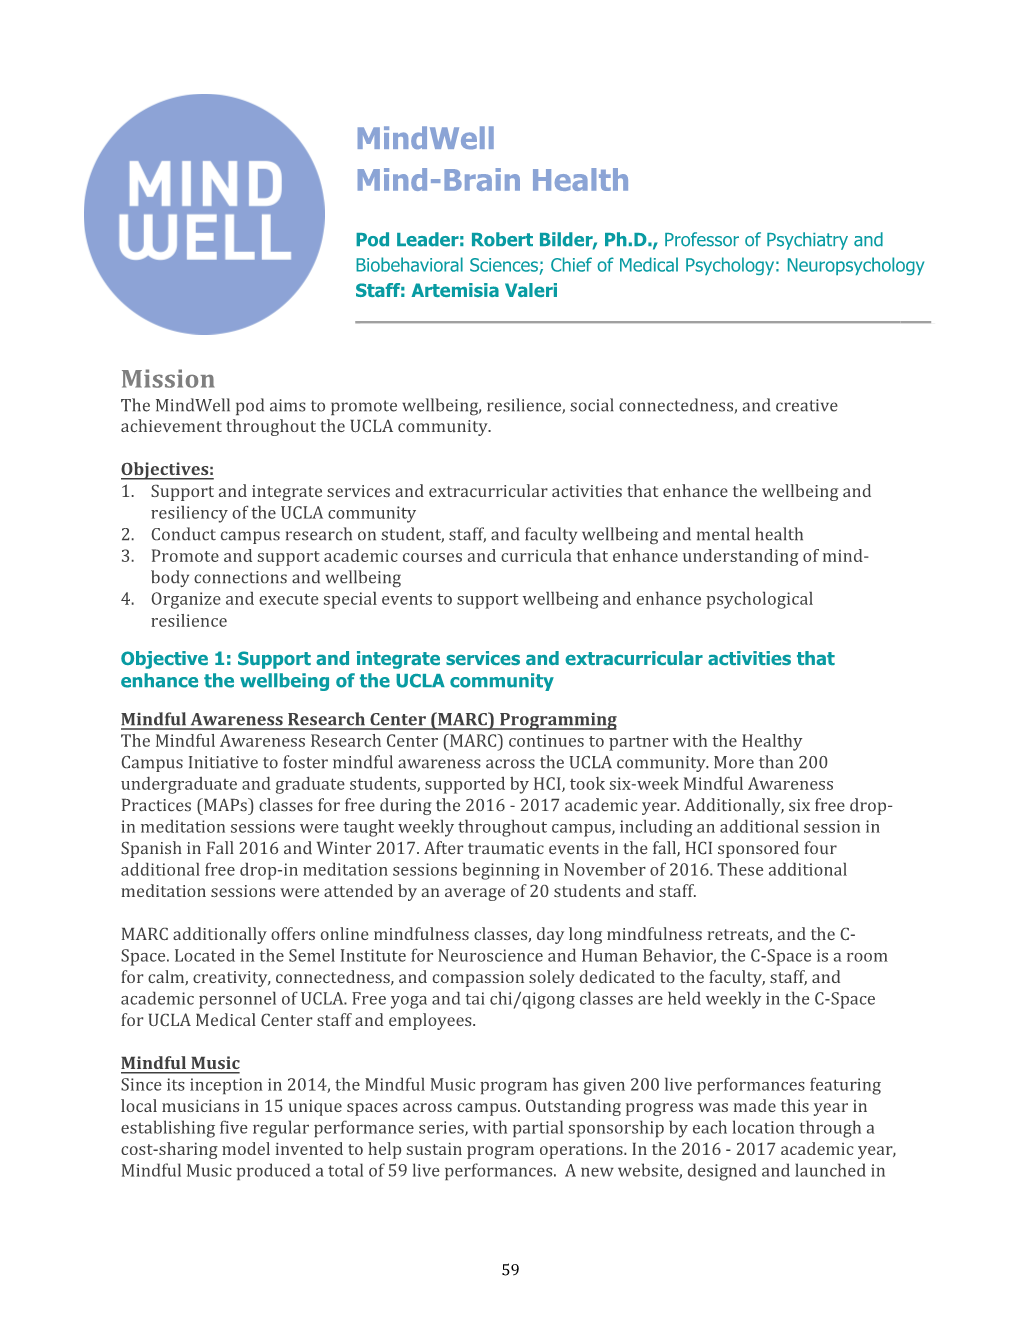 Mindwell Mind-Brain Health